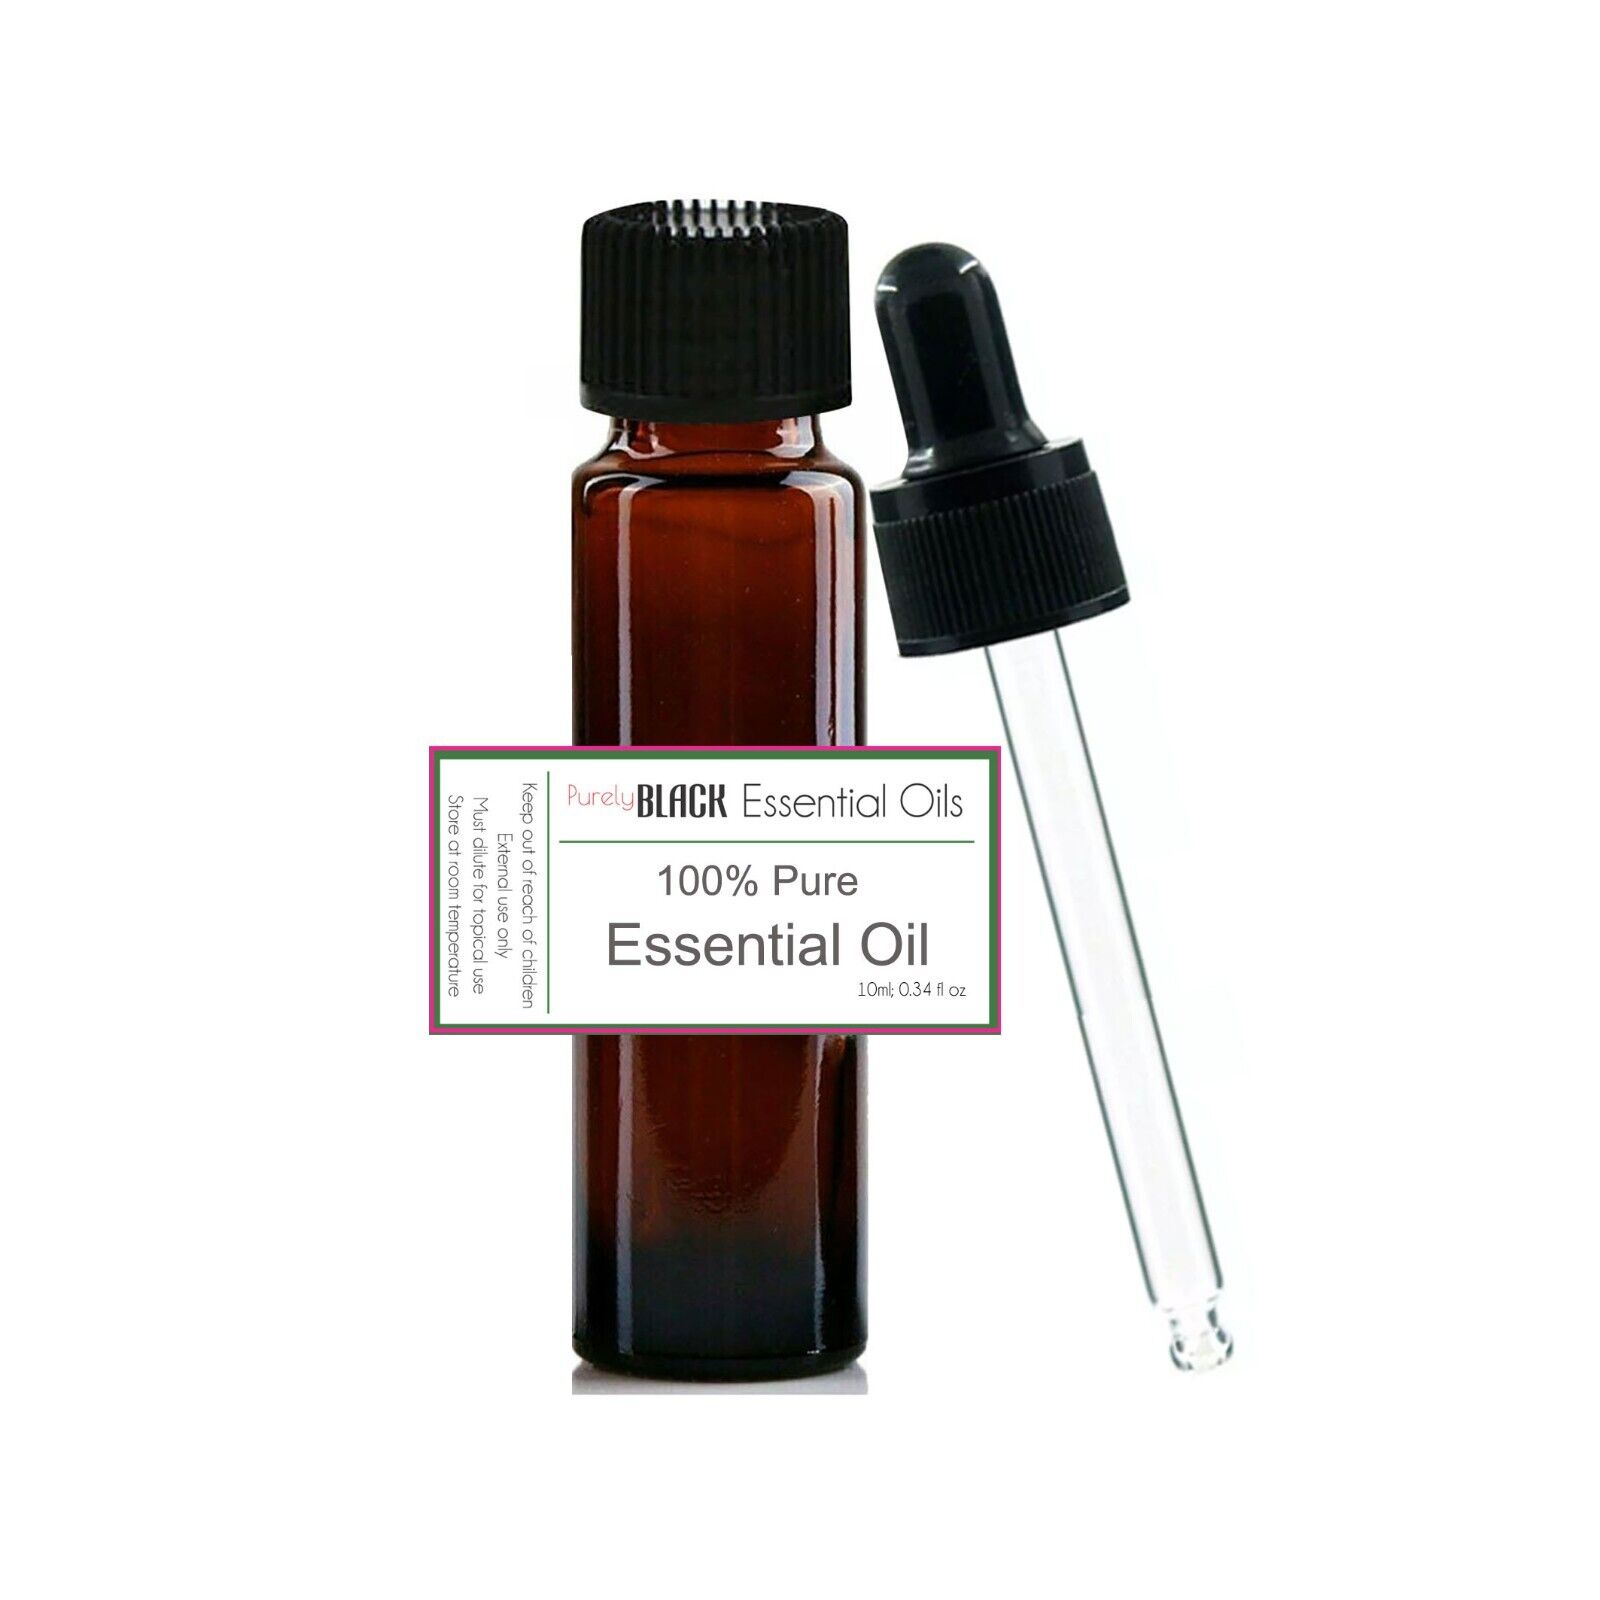 Pure Essential Oils For Aroma Oil Diffuser, Air Diffuser, Aromatherapy, Skincare